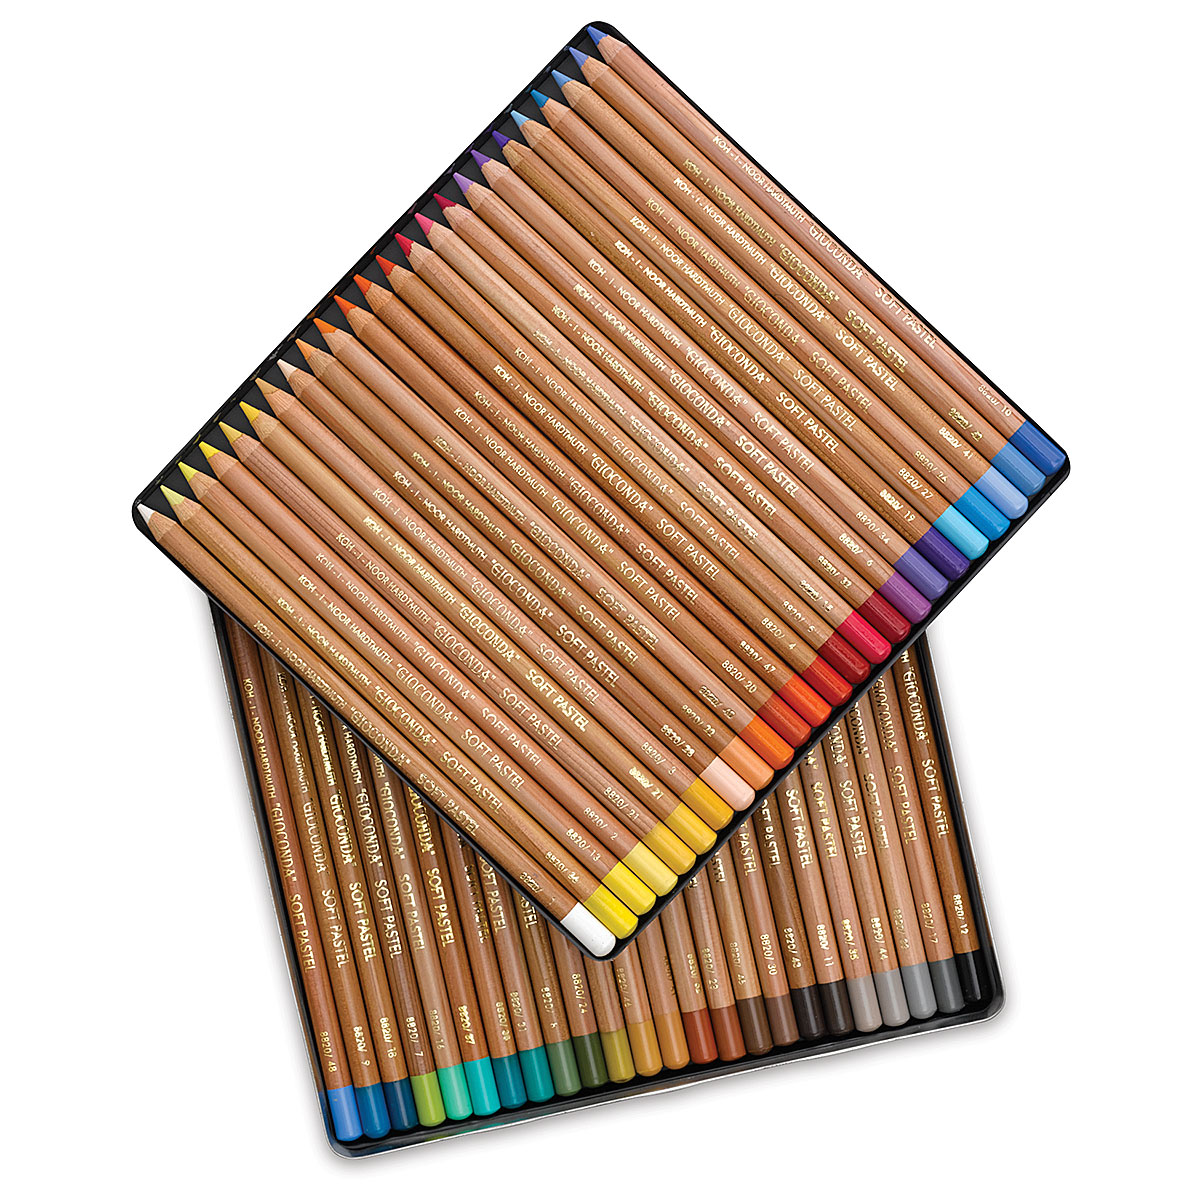 dainayw Skin Tone Pastel Pencils, Soft 5mm Core, Premier Colored Pencils  For Artist Drawing, Sketching - 12 Piece Portrait Set